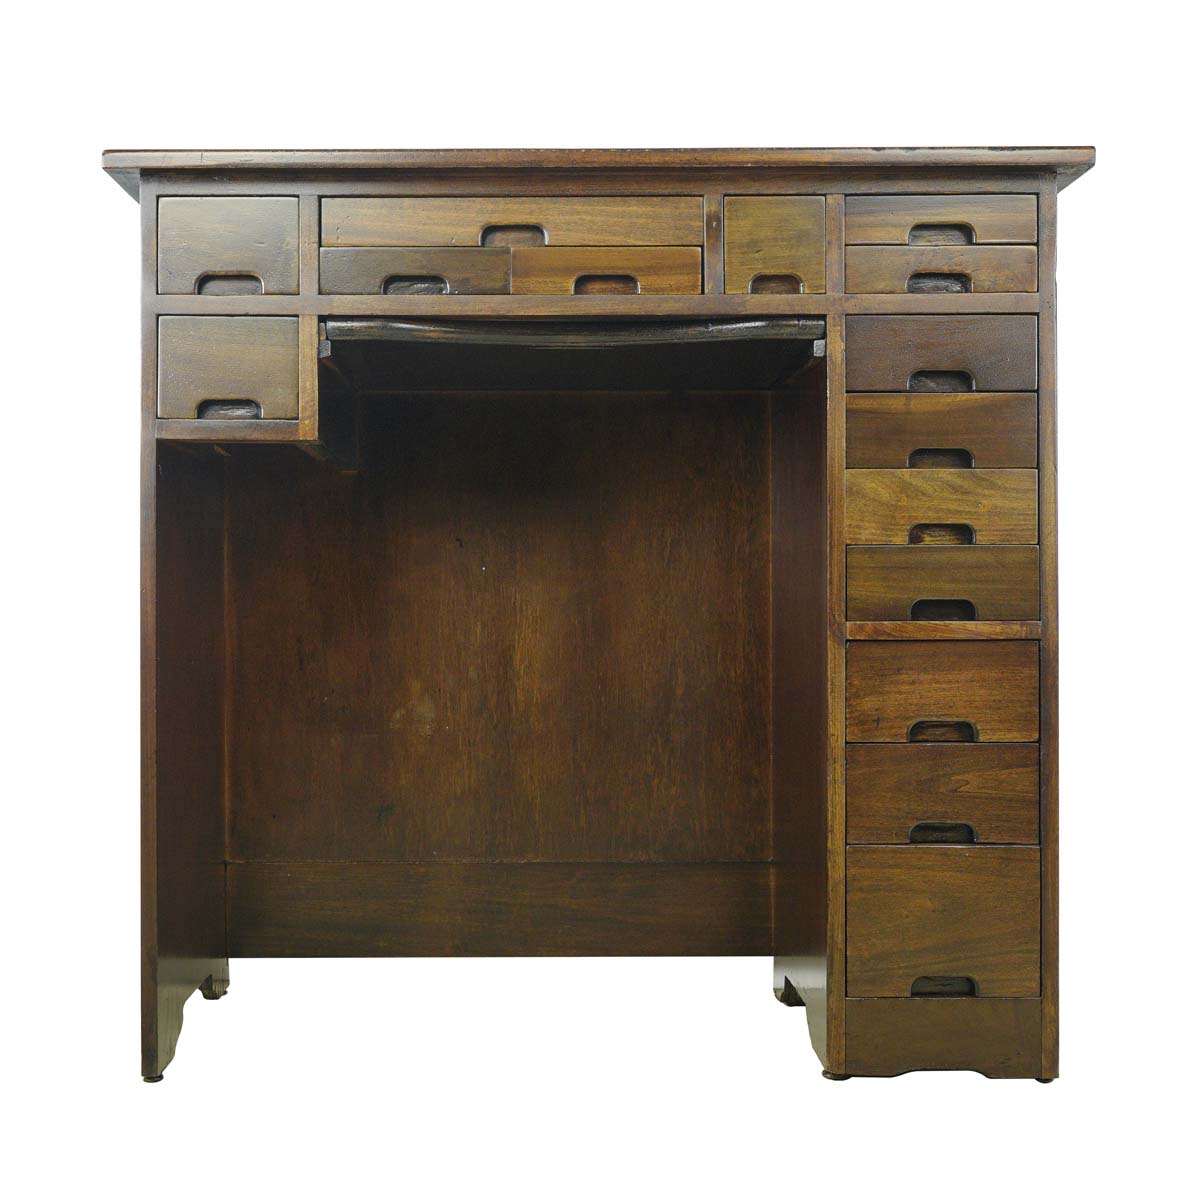 Antique Pine Flat File Cabinet - SOLD - Vintage Industrial by Get Back, Inc